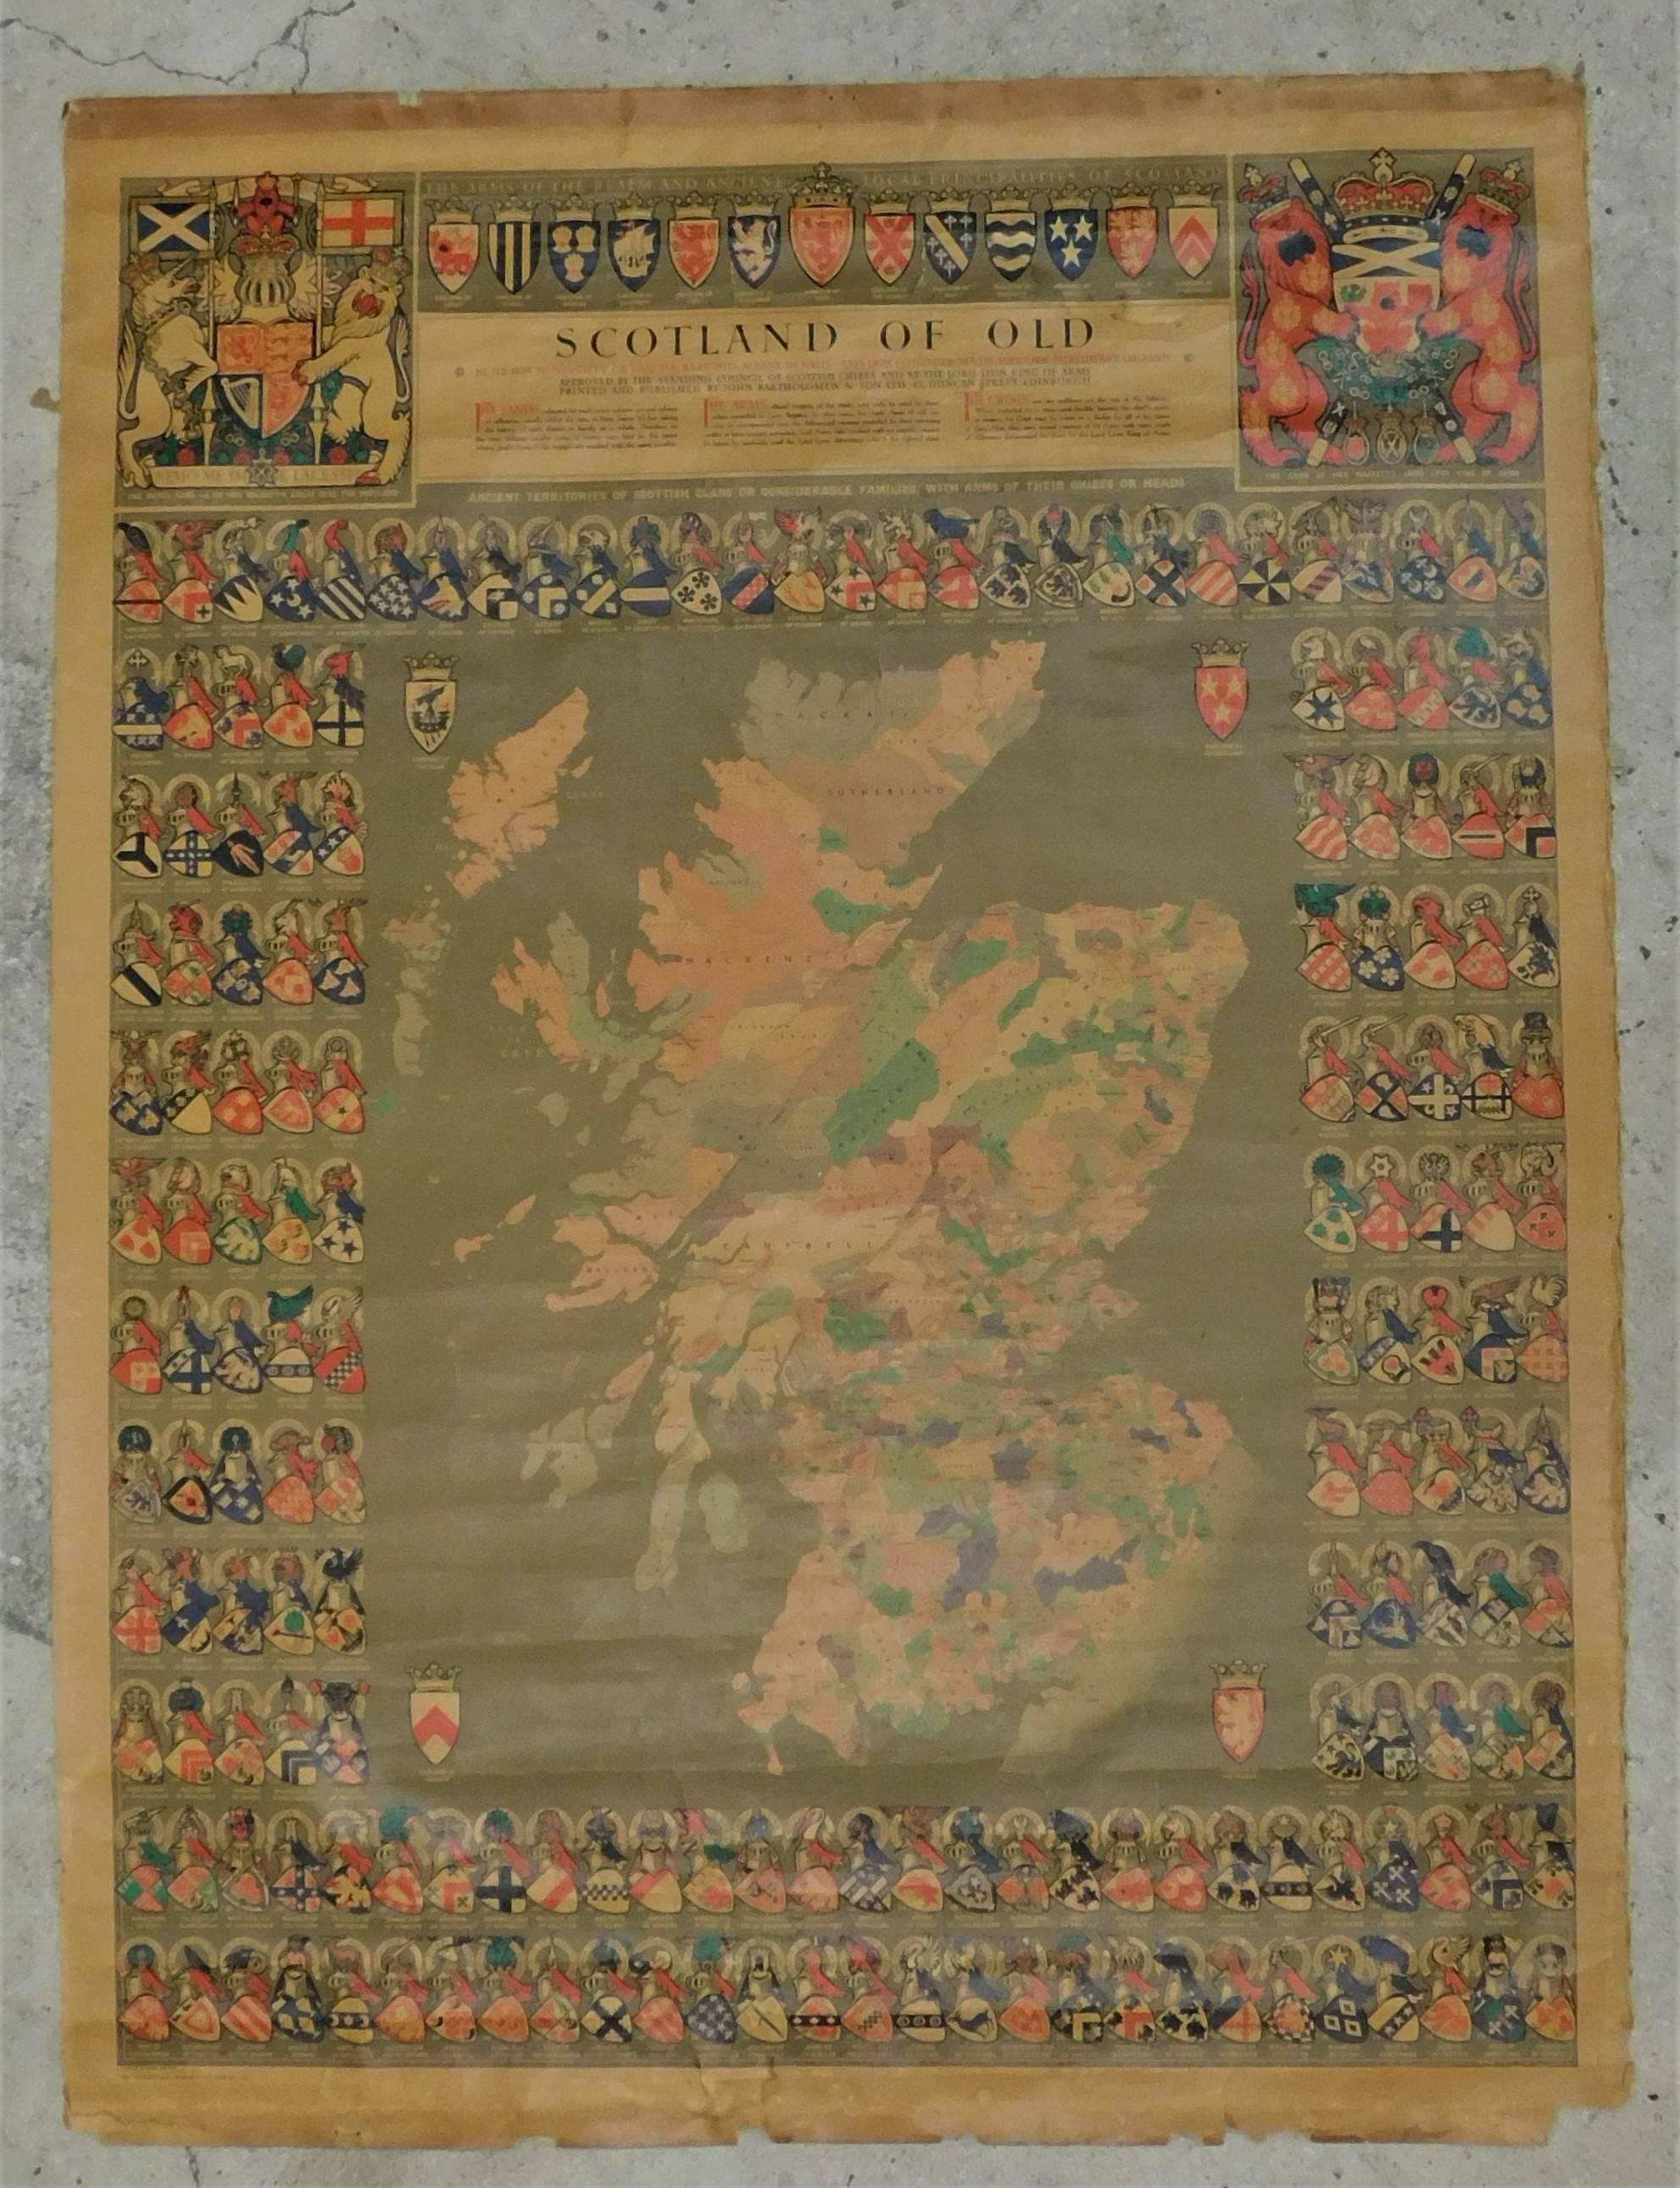 clan map of scotland 1600